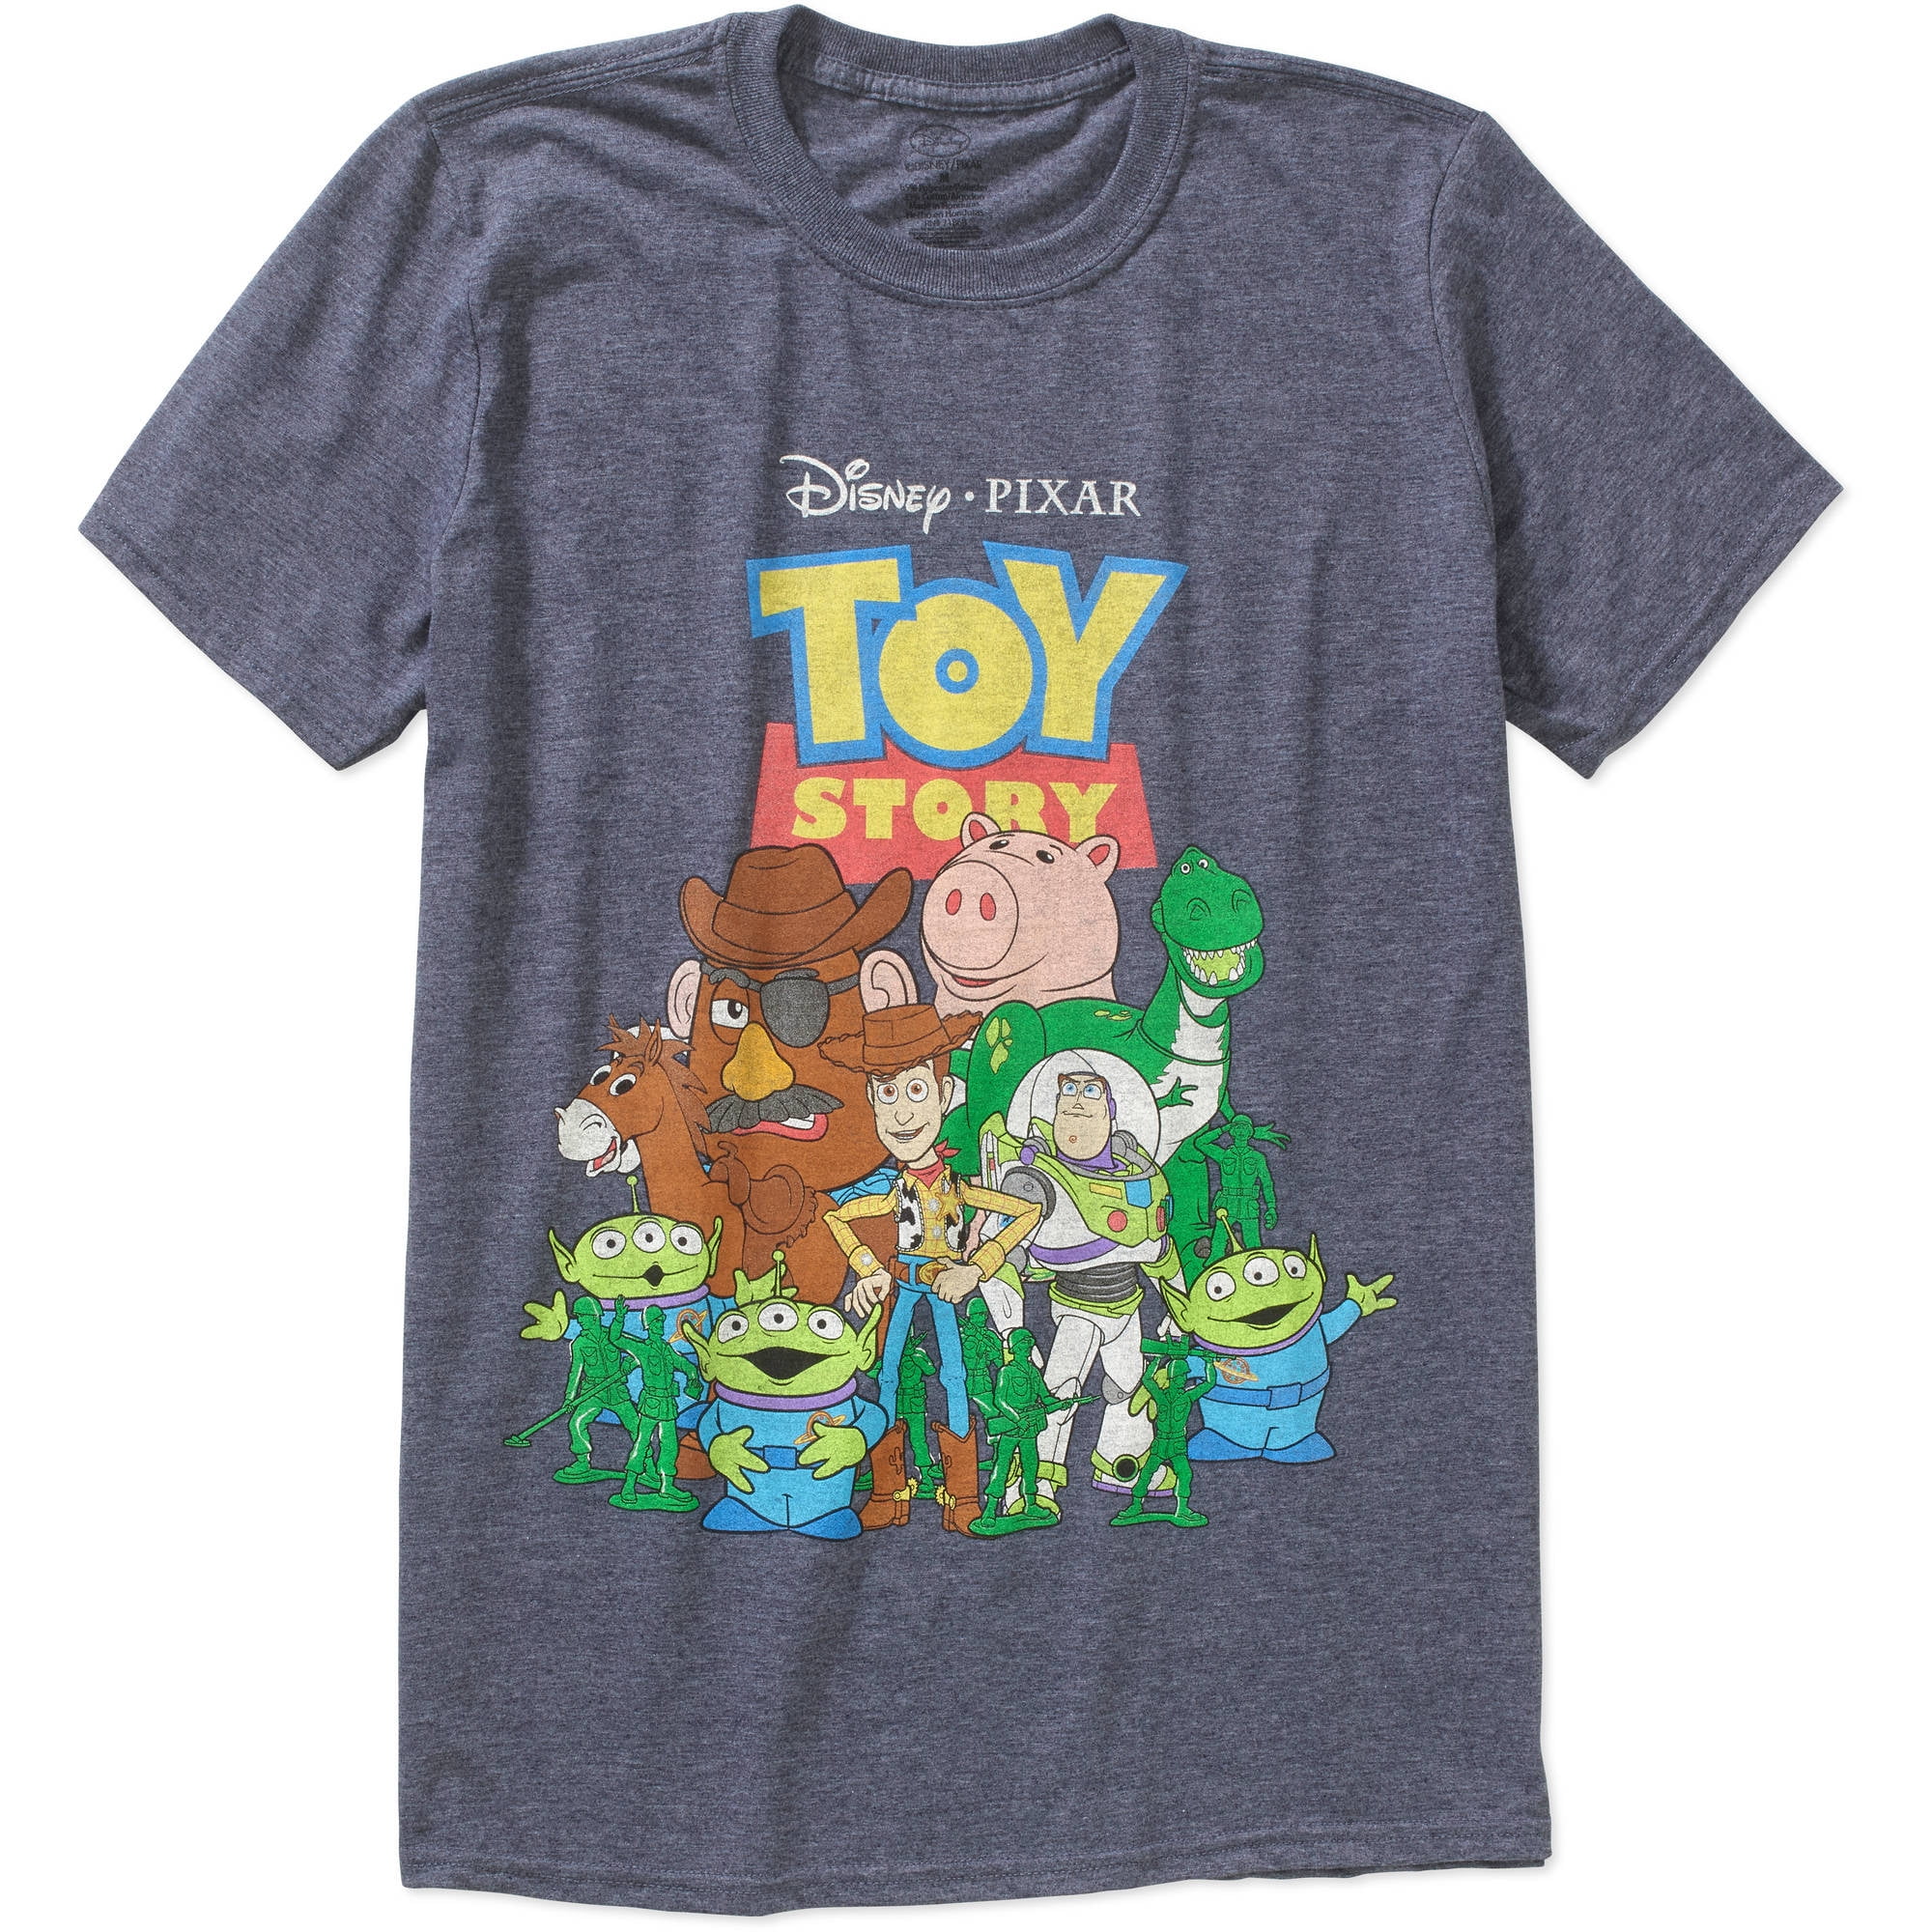 Disney Pixar Toy Story Short Sleeve Graphic T-Shirt /& Shorts Set